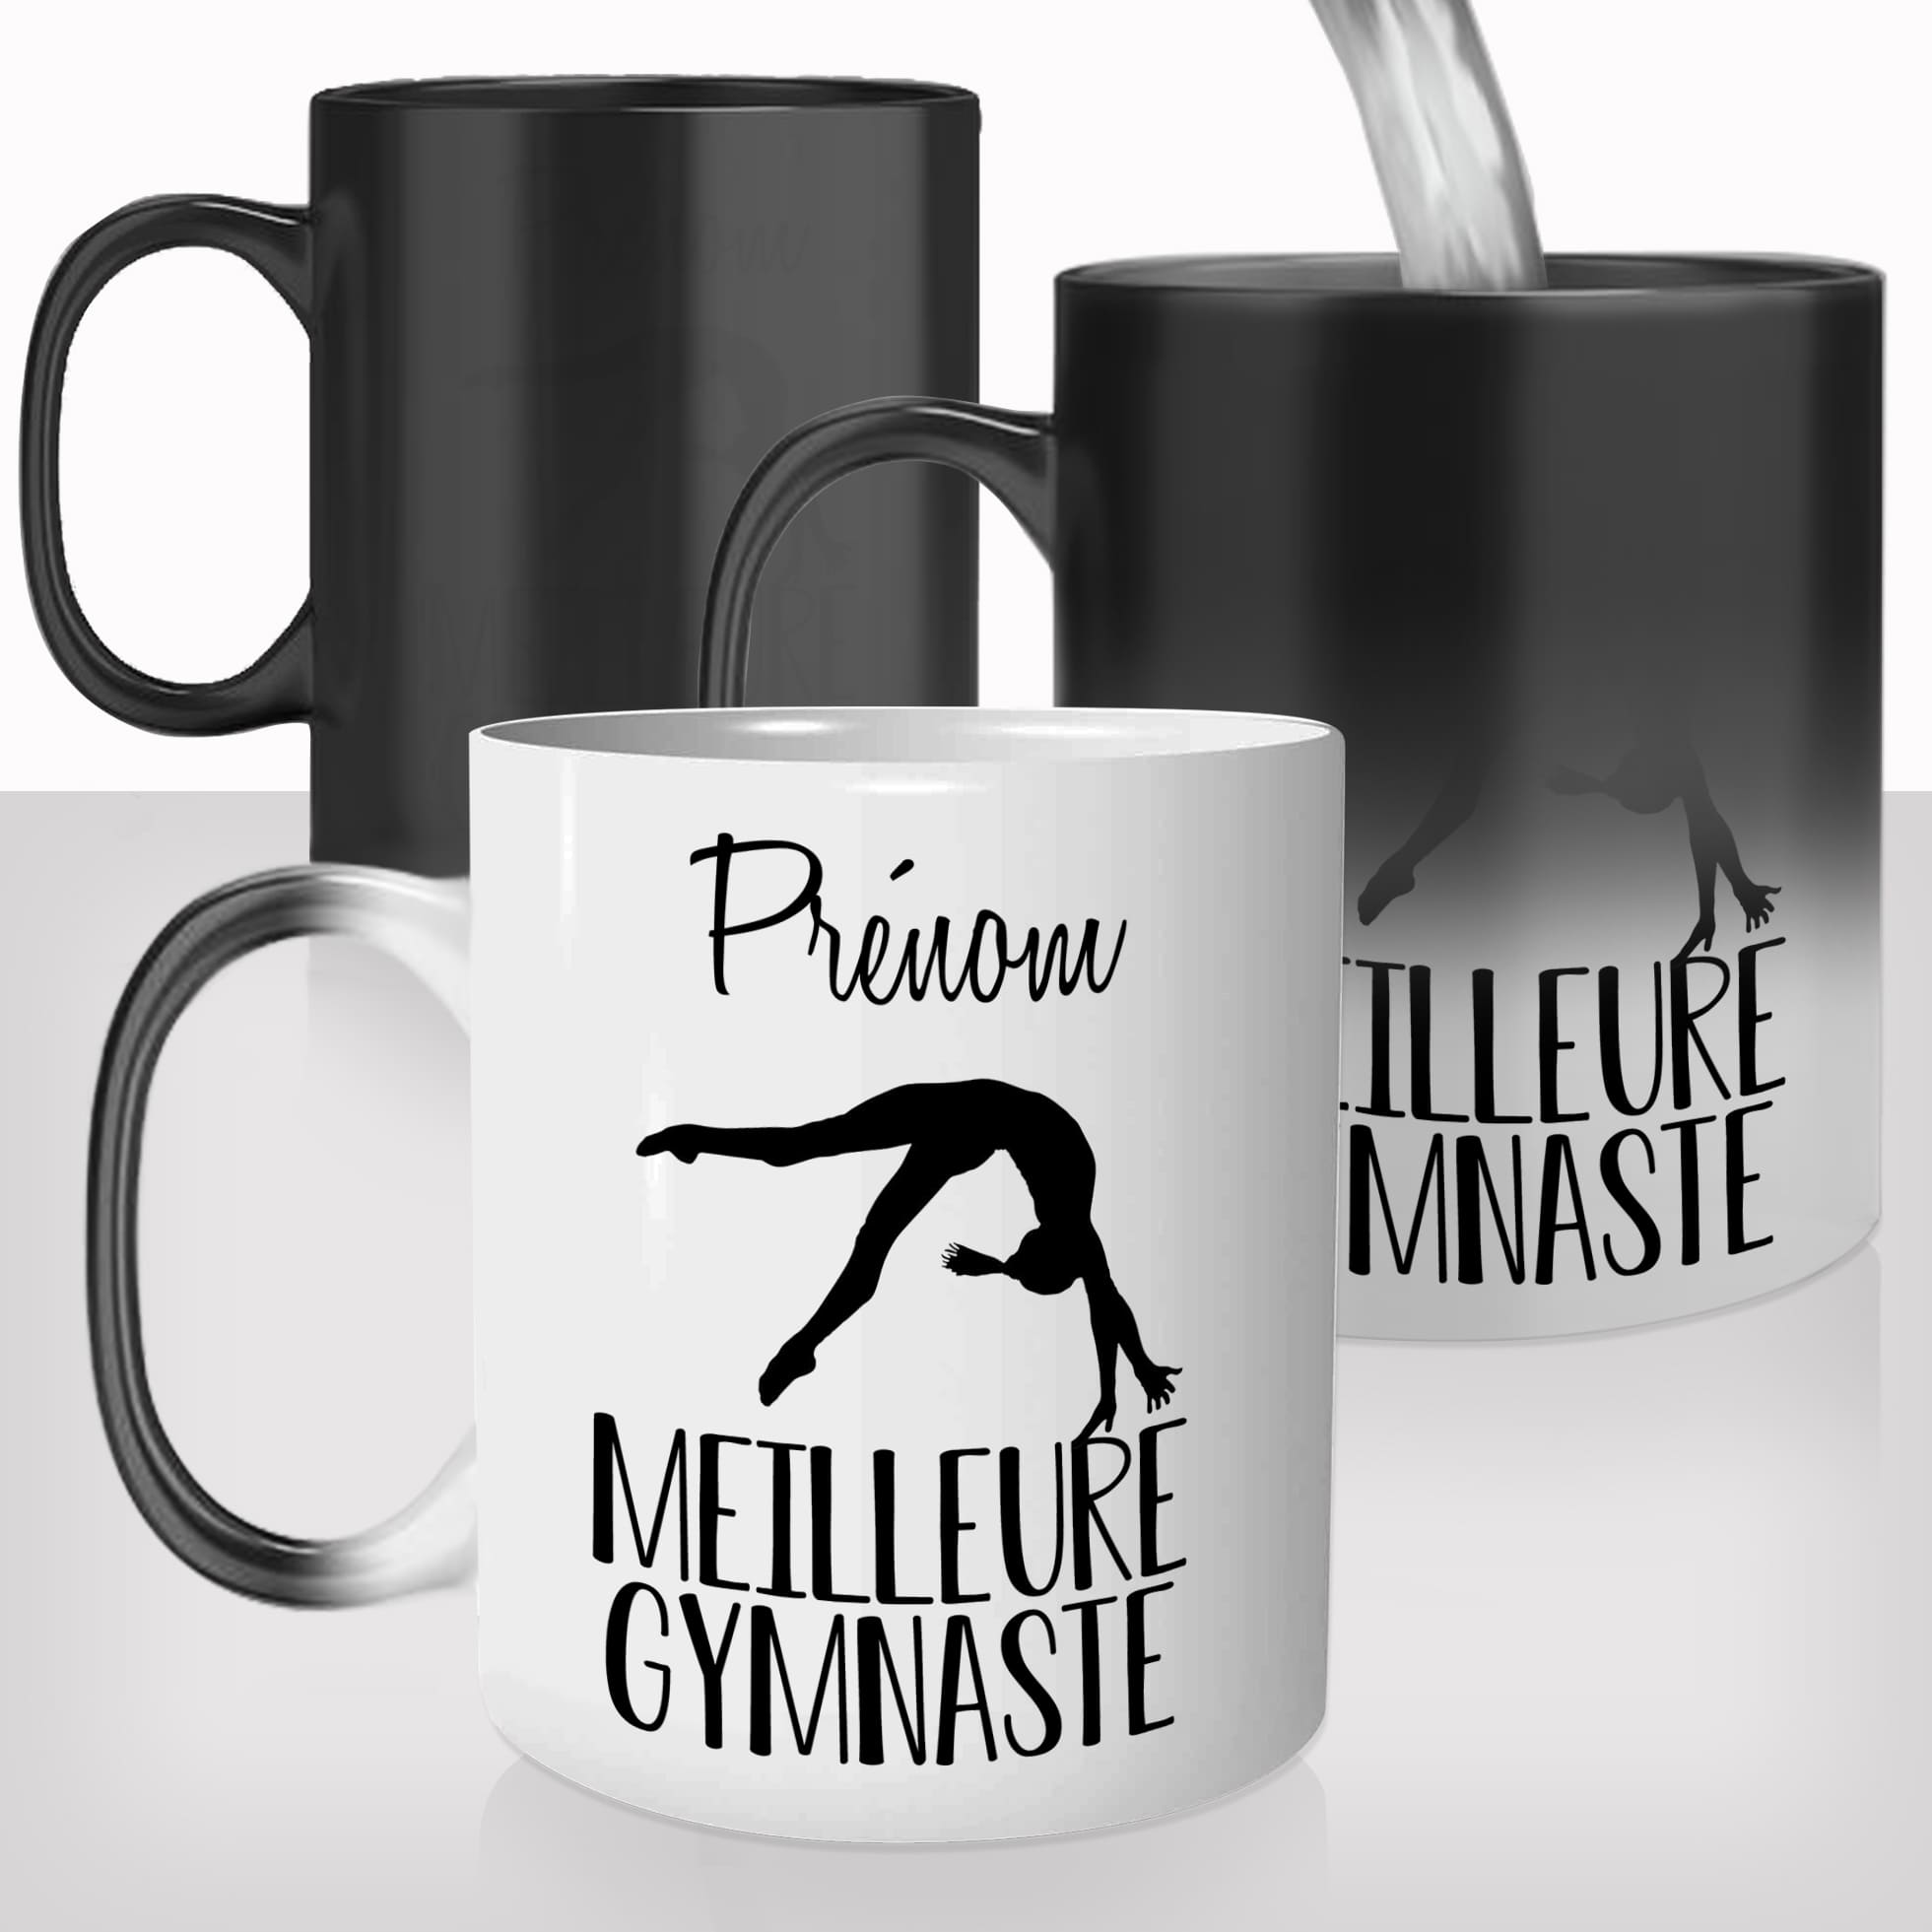 mug-magique-personnalisable-thermoreactif-thermique-meilleure-gymnaste-gym-gymnastique-femme-prénom-personnalisé-fun-idée-cadeau-original